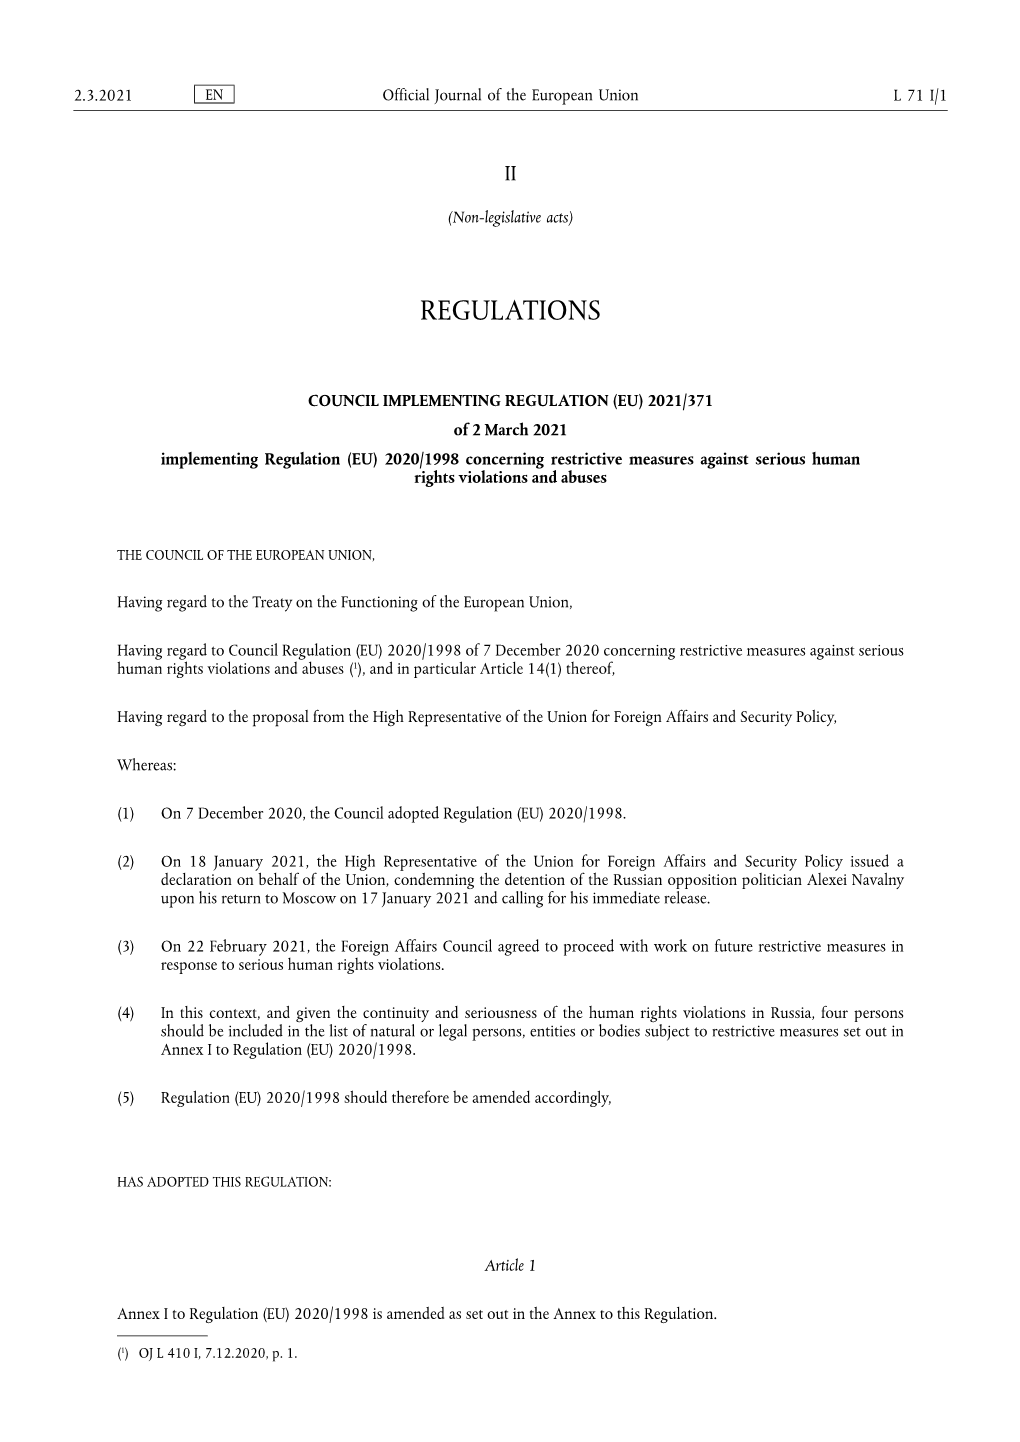 Council Implementing Regulation (EU) 2021/371